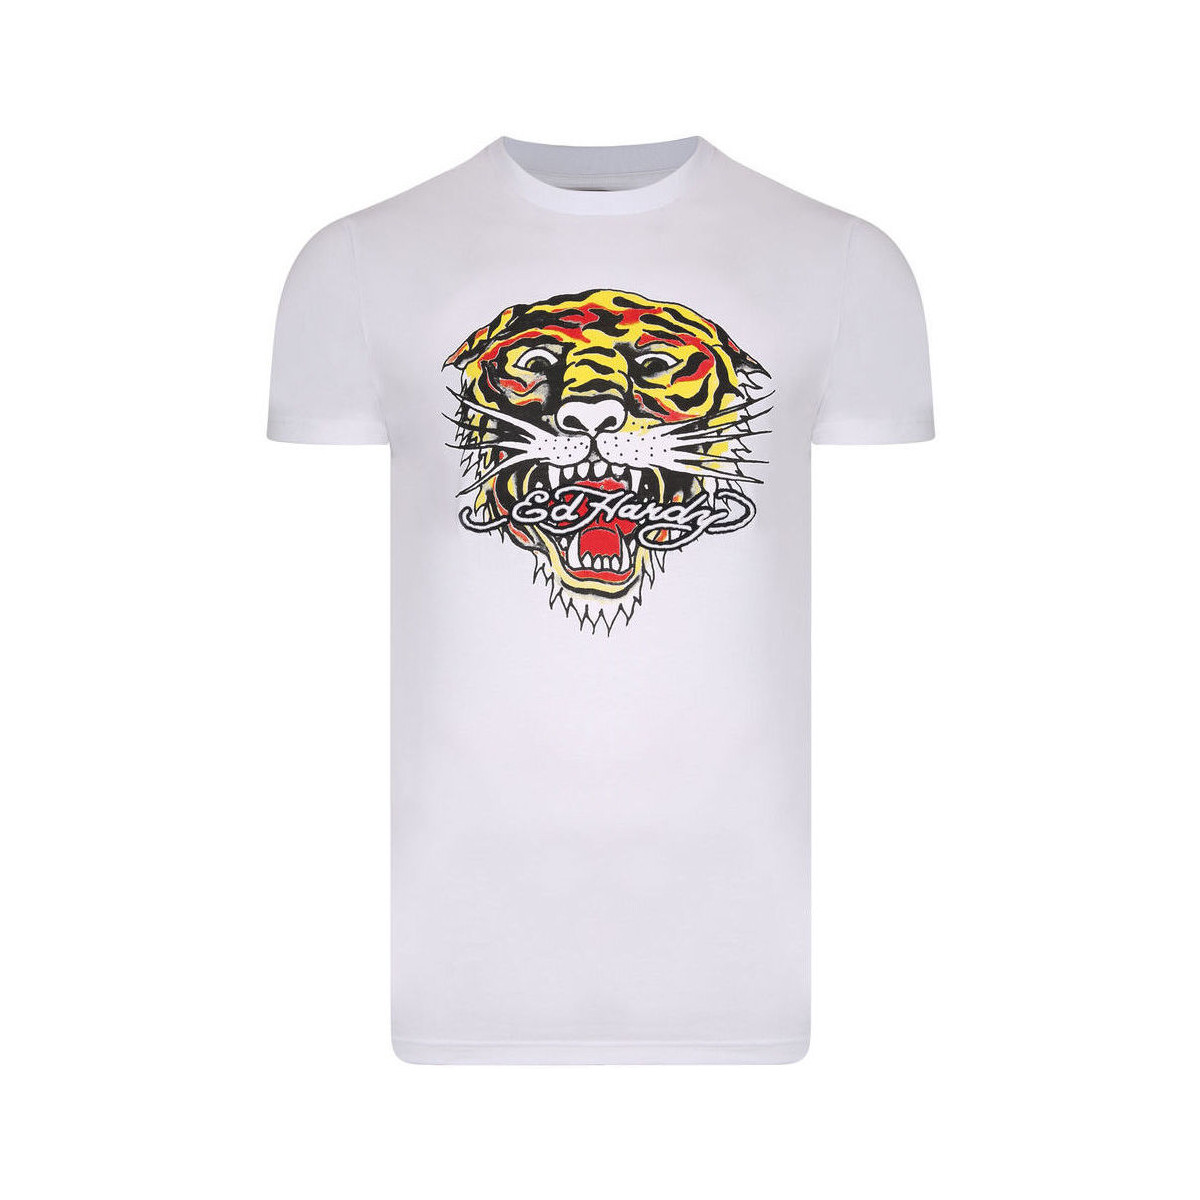 textil Herr T-shirts Ed Hardy Tiger mouth graphic t-shirt white Vit